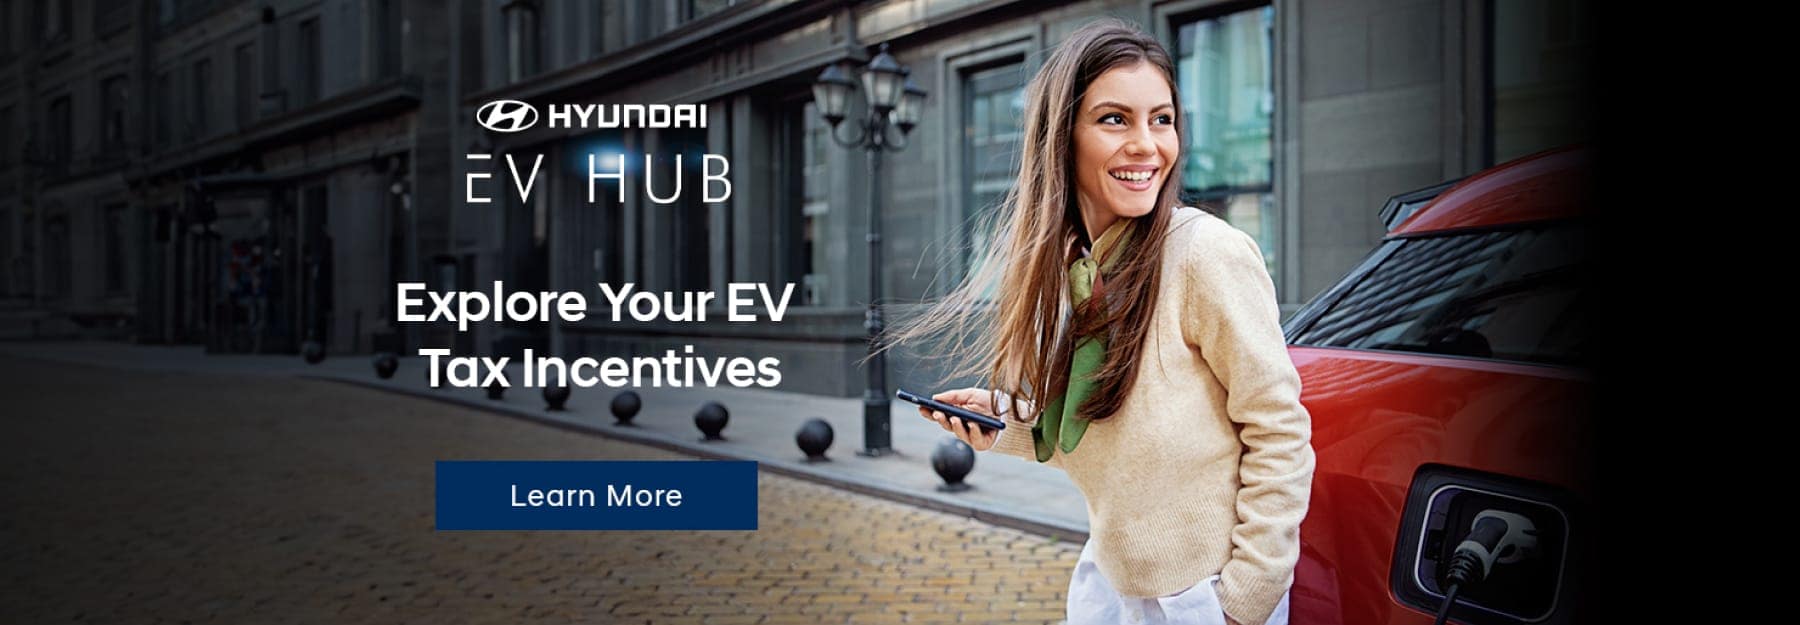 Hyundai EV Education Hub